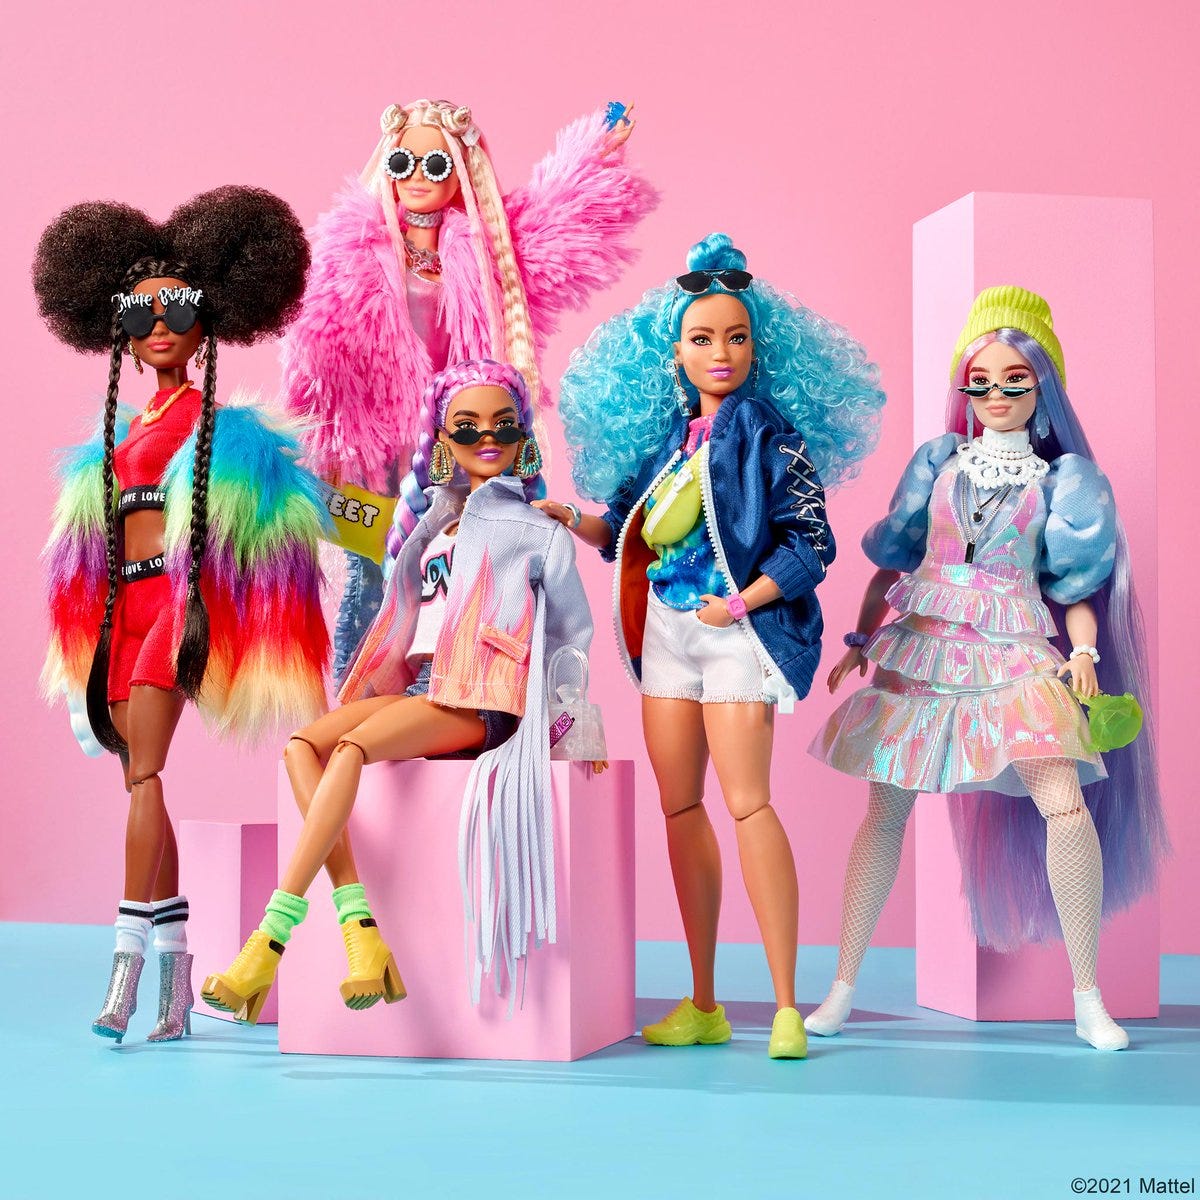 Barbie on Twitter: "Born to be bold. #BarbieEXTRA https://t.co/Mwuq8VWQMC  https://t.co/UBRw94A6Lj" / Twitter